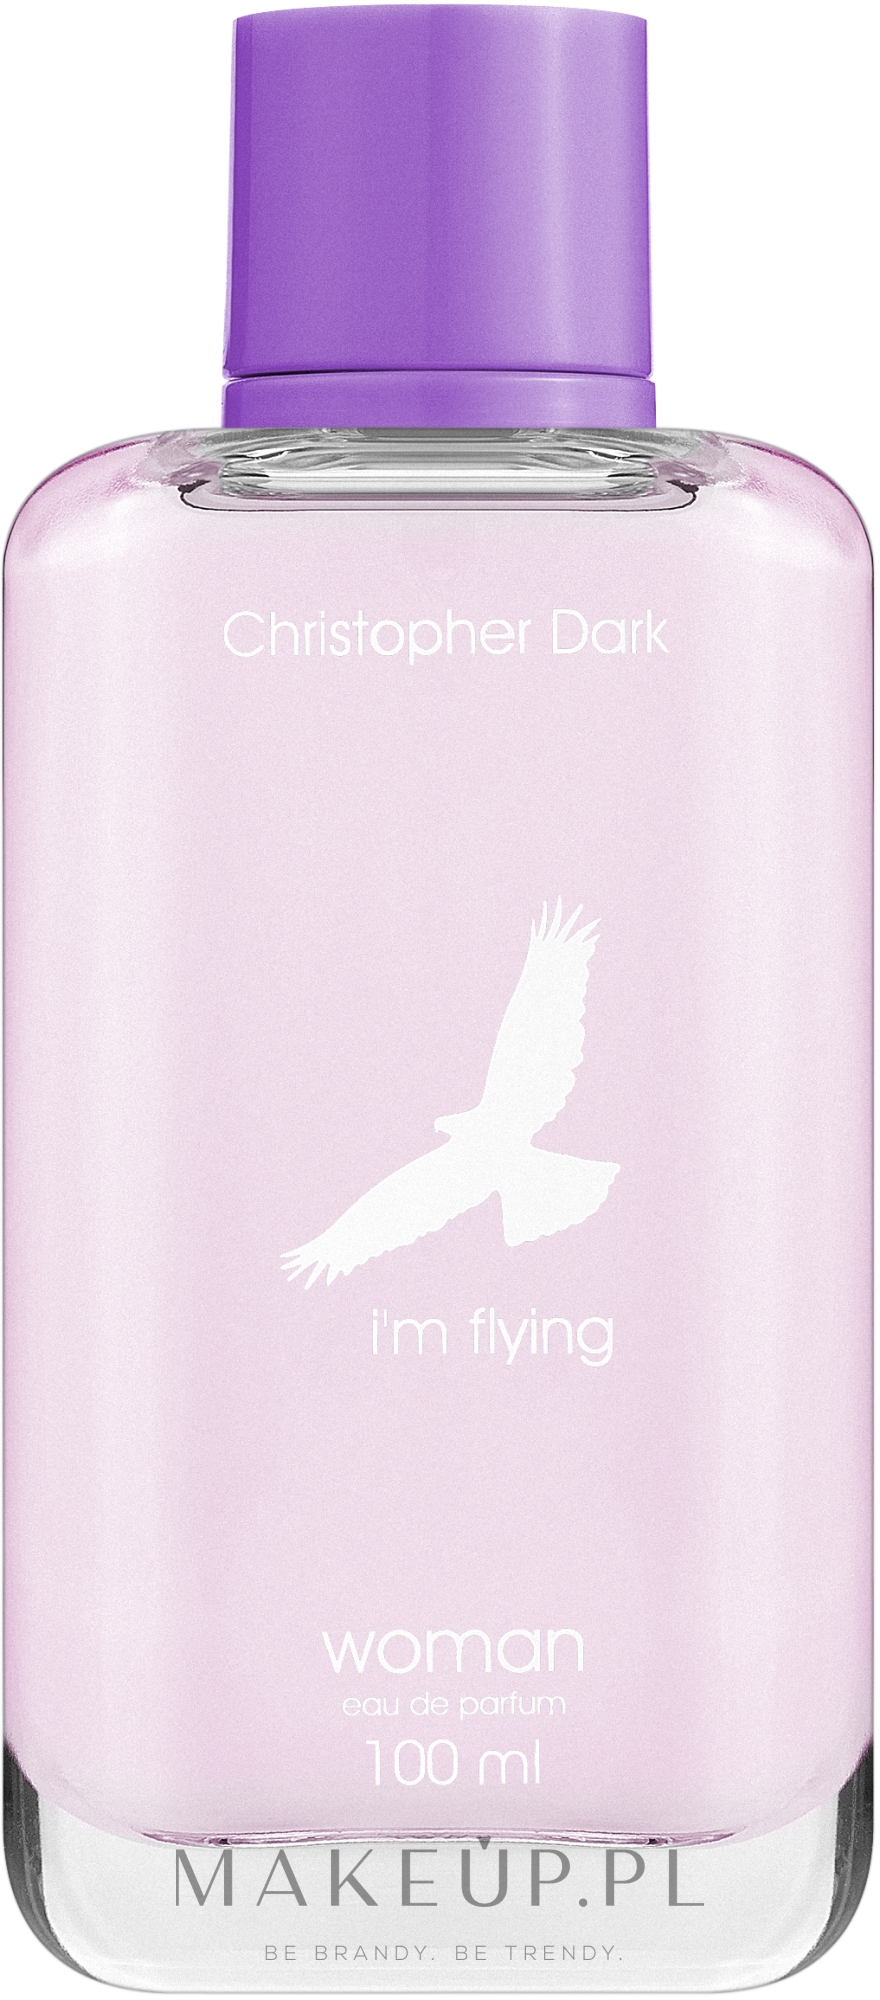 christopher dark i'm flying